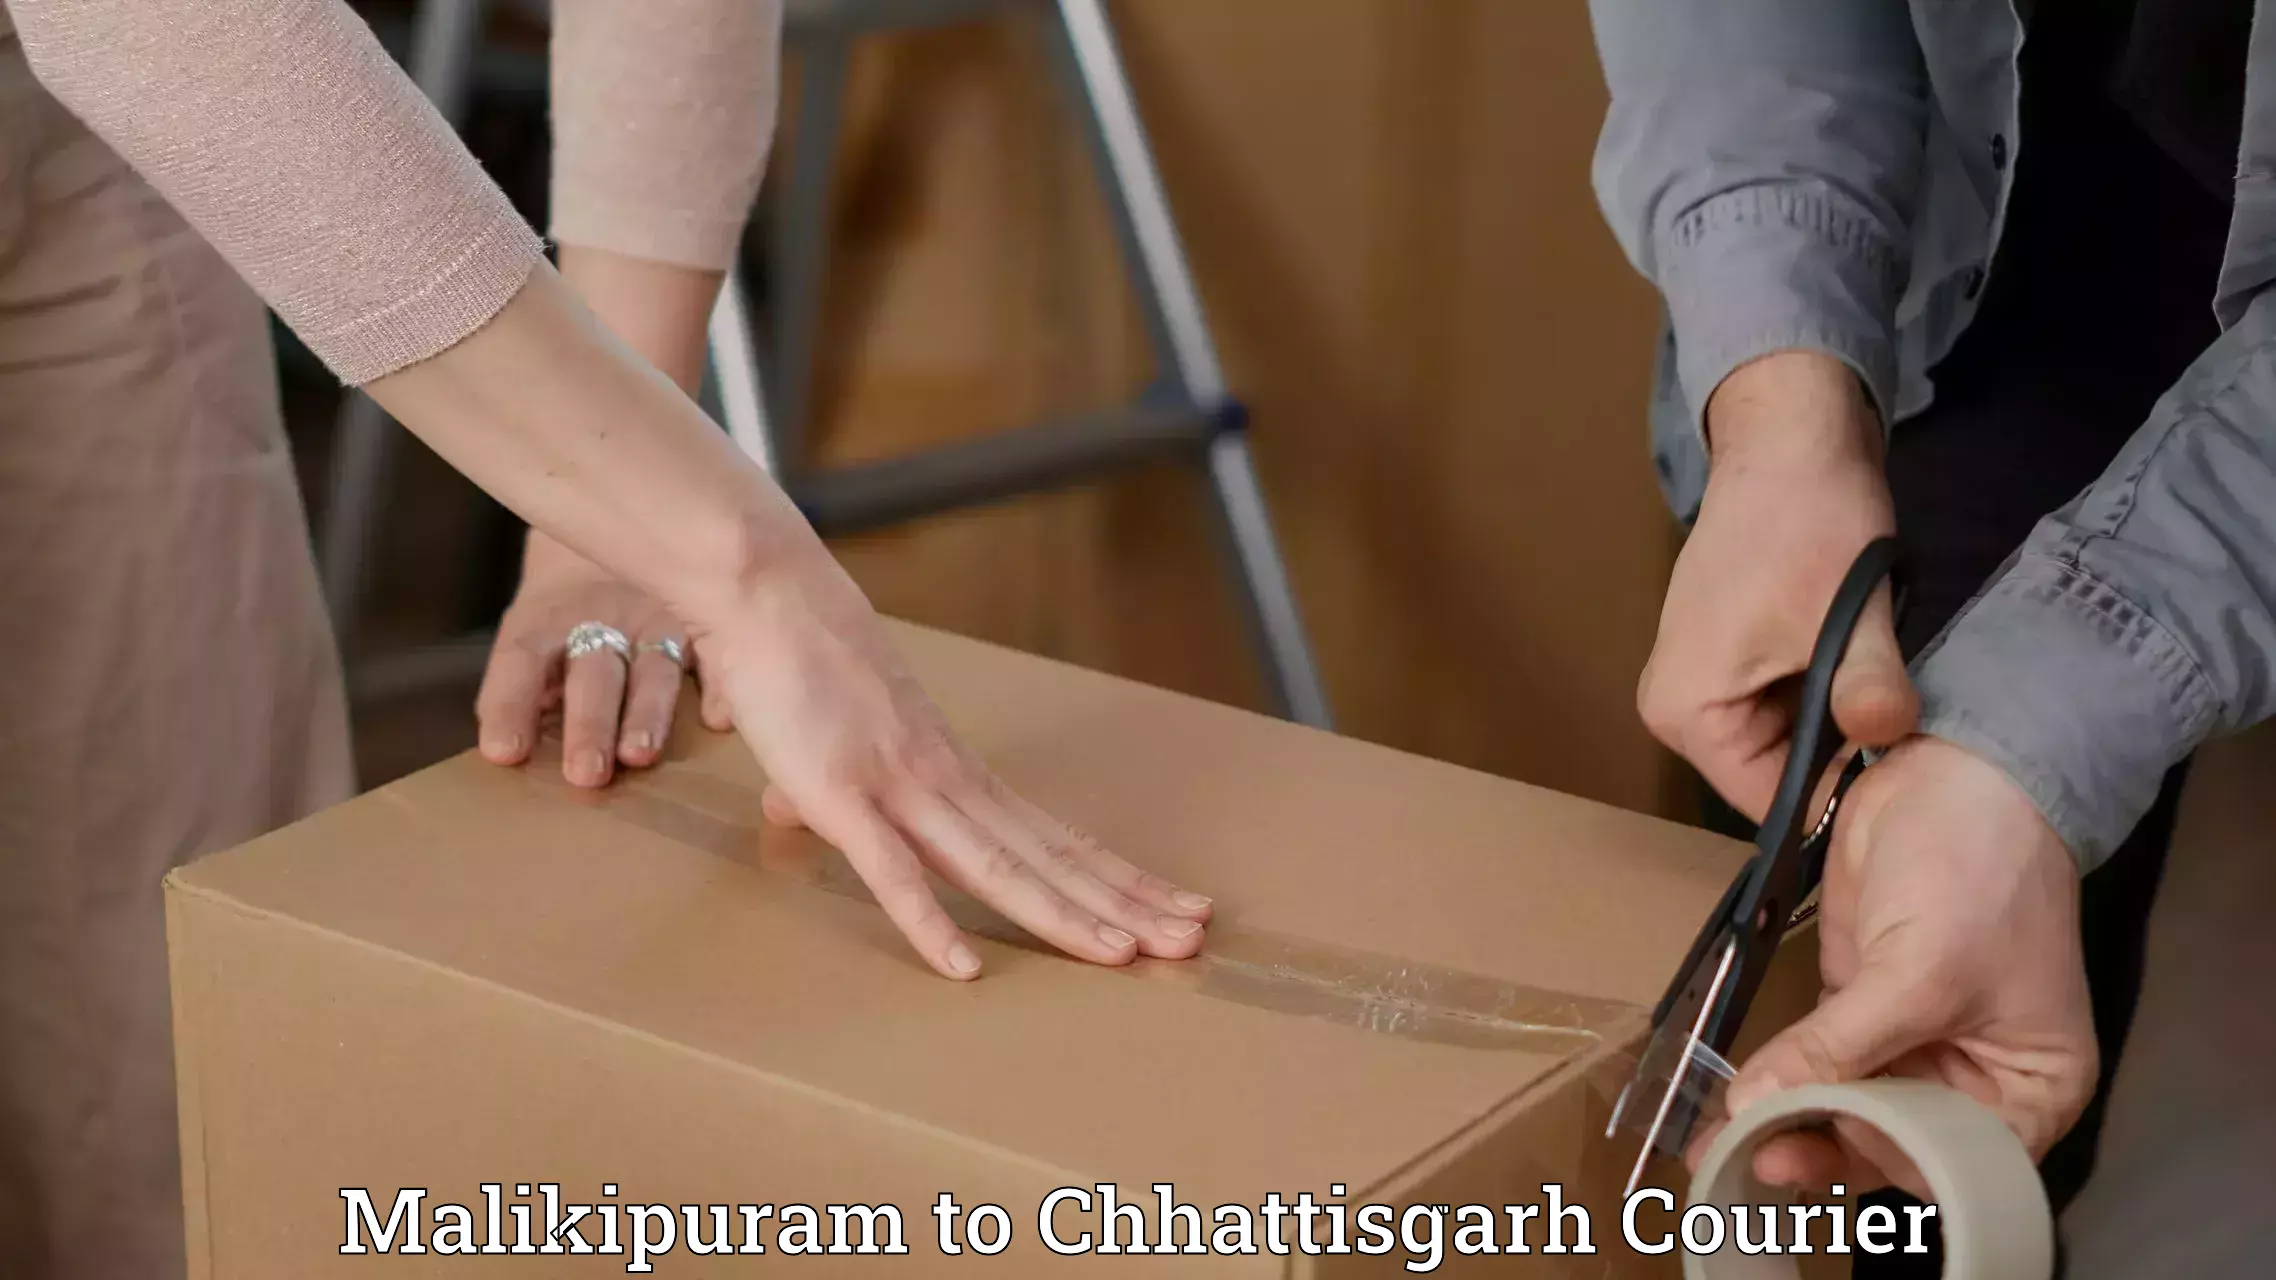 Business delivery service Malikipuram to Chhattisgarh